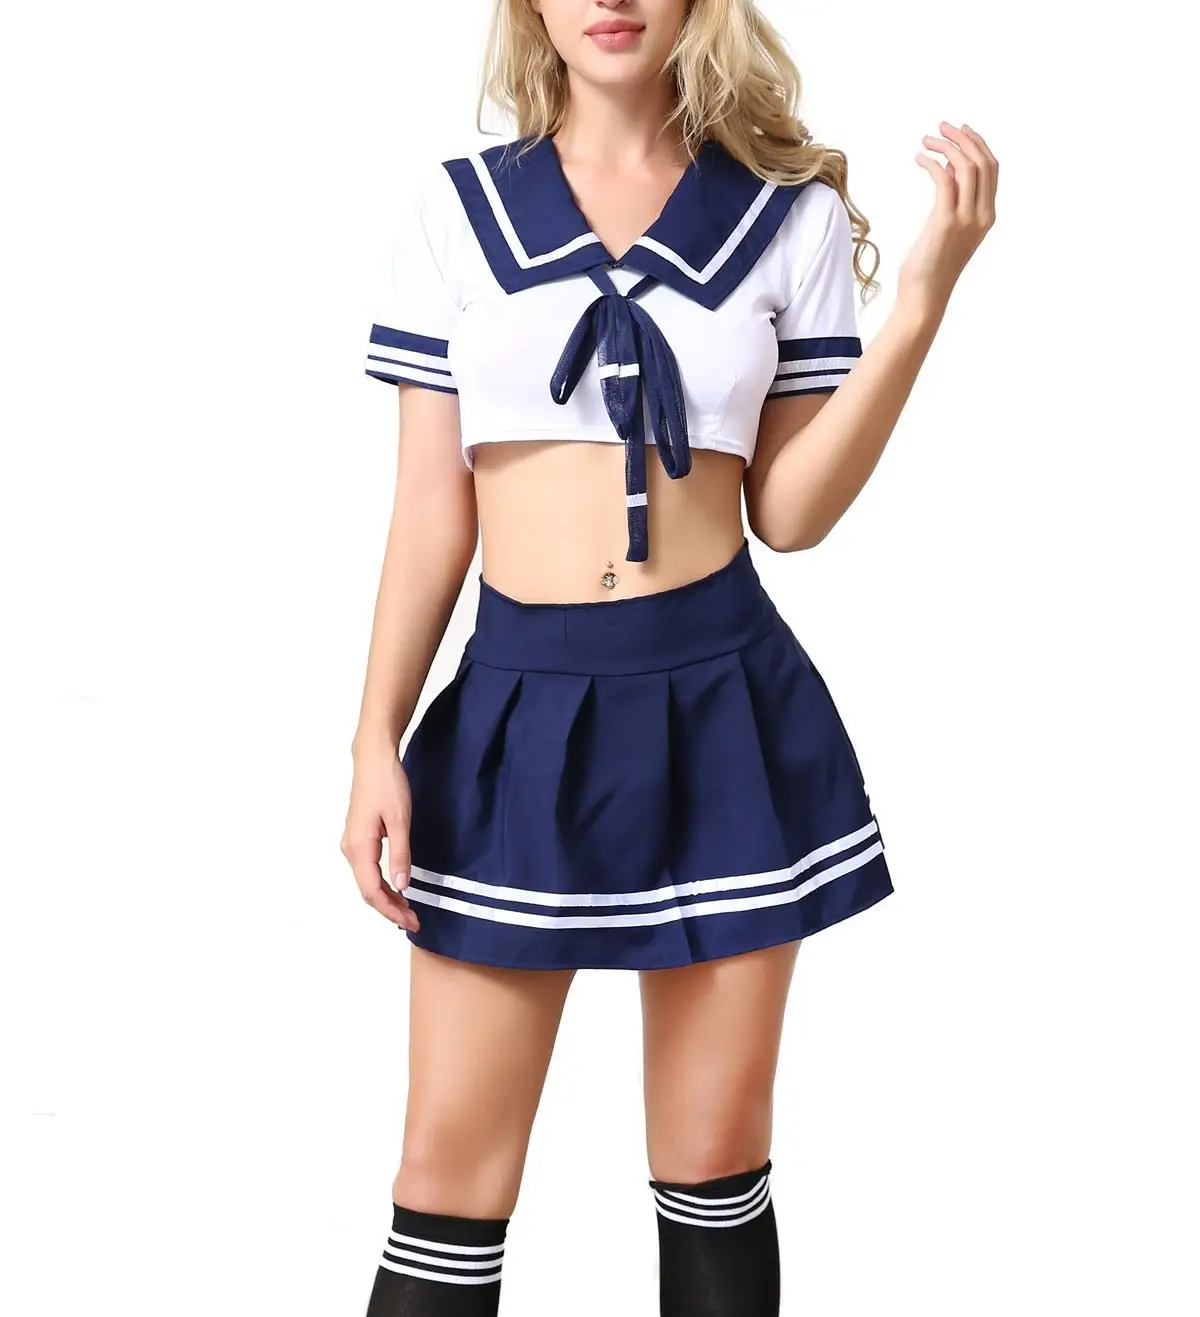 Roleplay-disfraces de sailor para niñas, picardías, lencería sexy japonesa